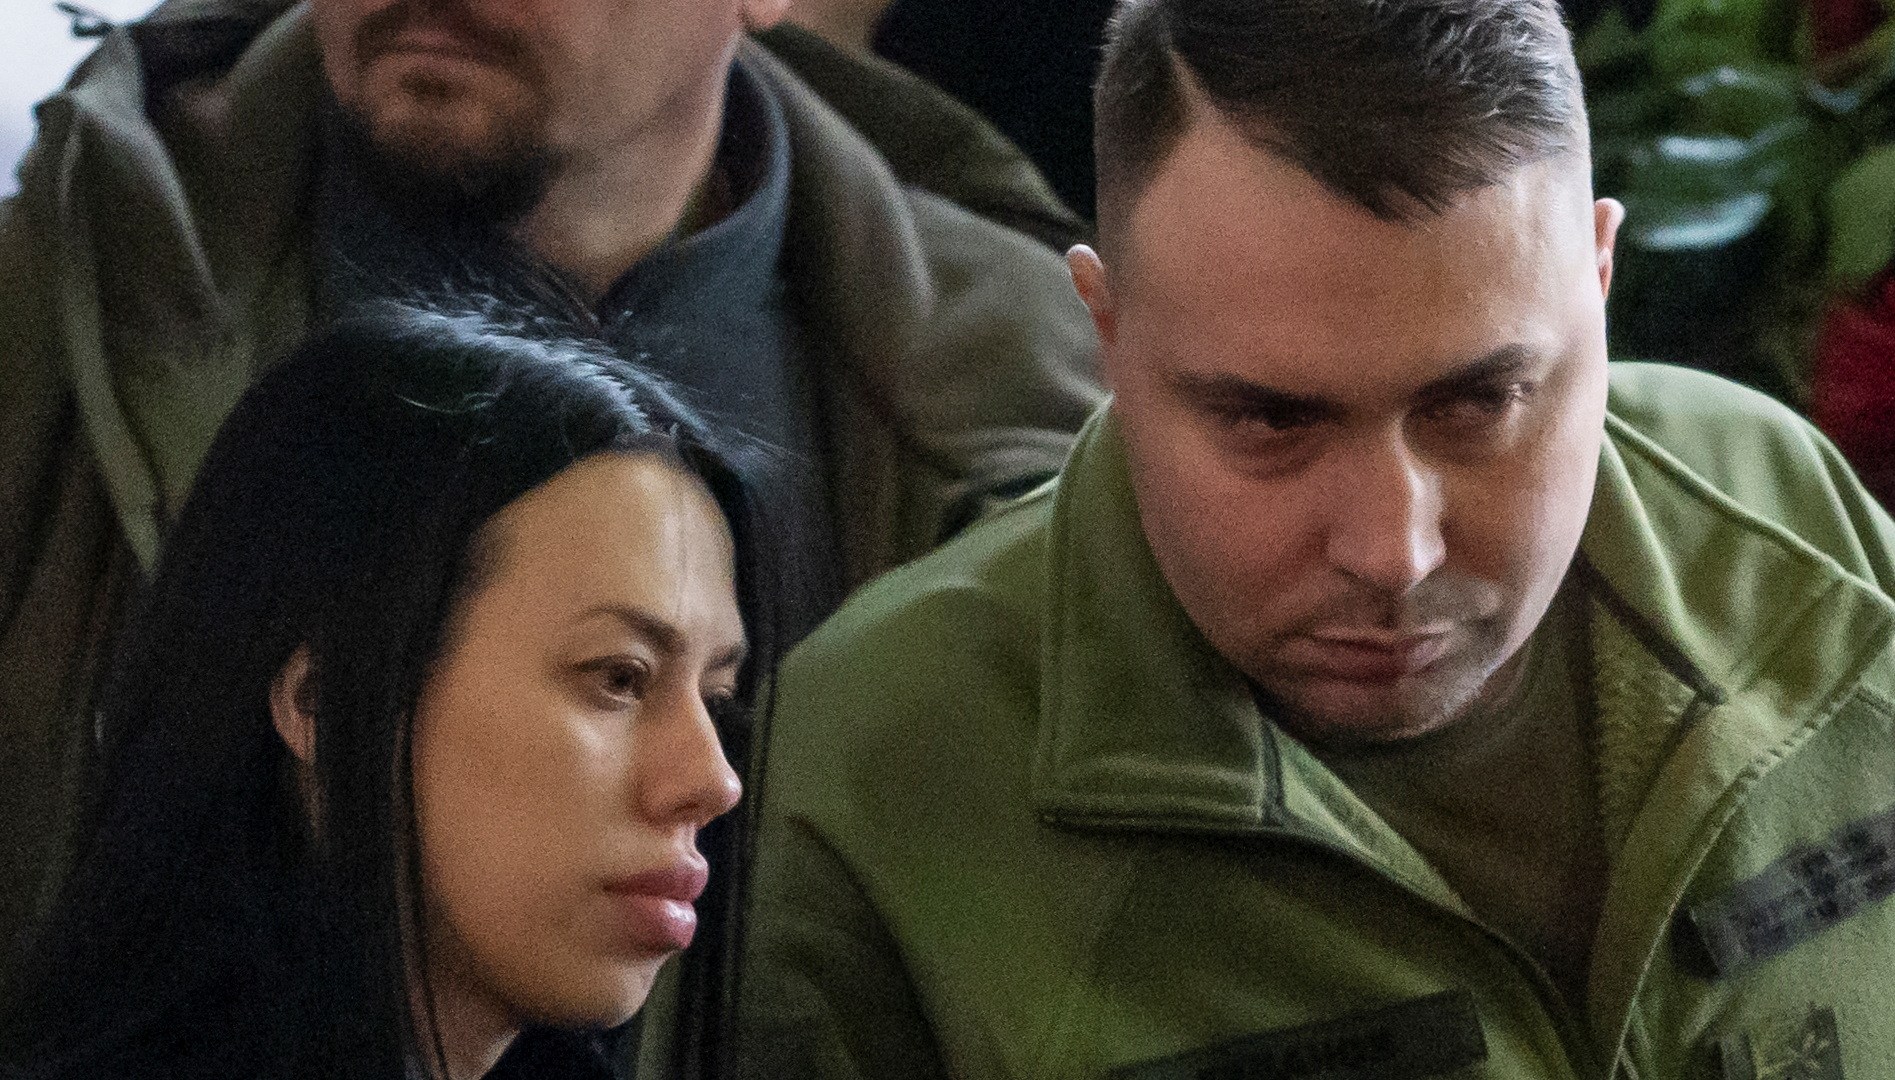 Ukraine says Marianna Budanova, wife of military spy chief, was poisoned | Russia-Ukraine war News #Ukraine #Marianna #Budanova #wife #military #spy #chief #poisoned #RussiaUkraine #war #News